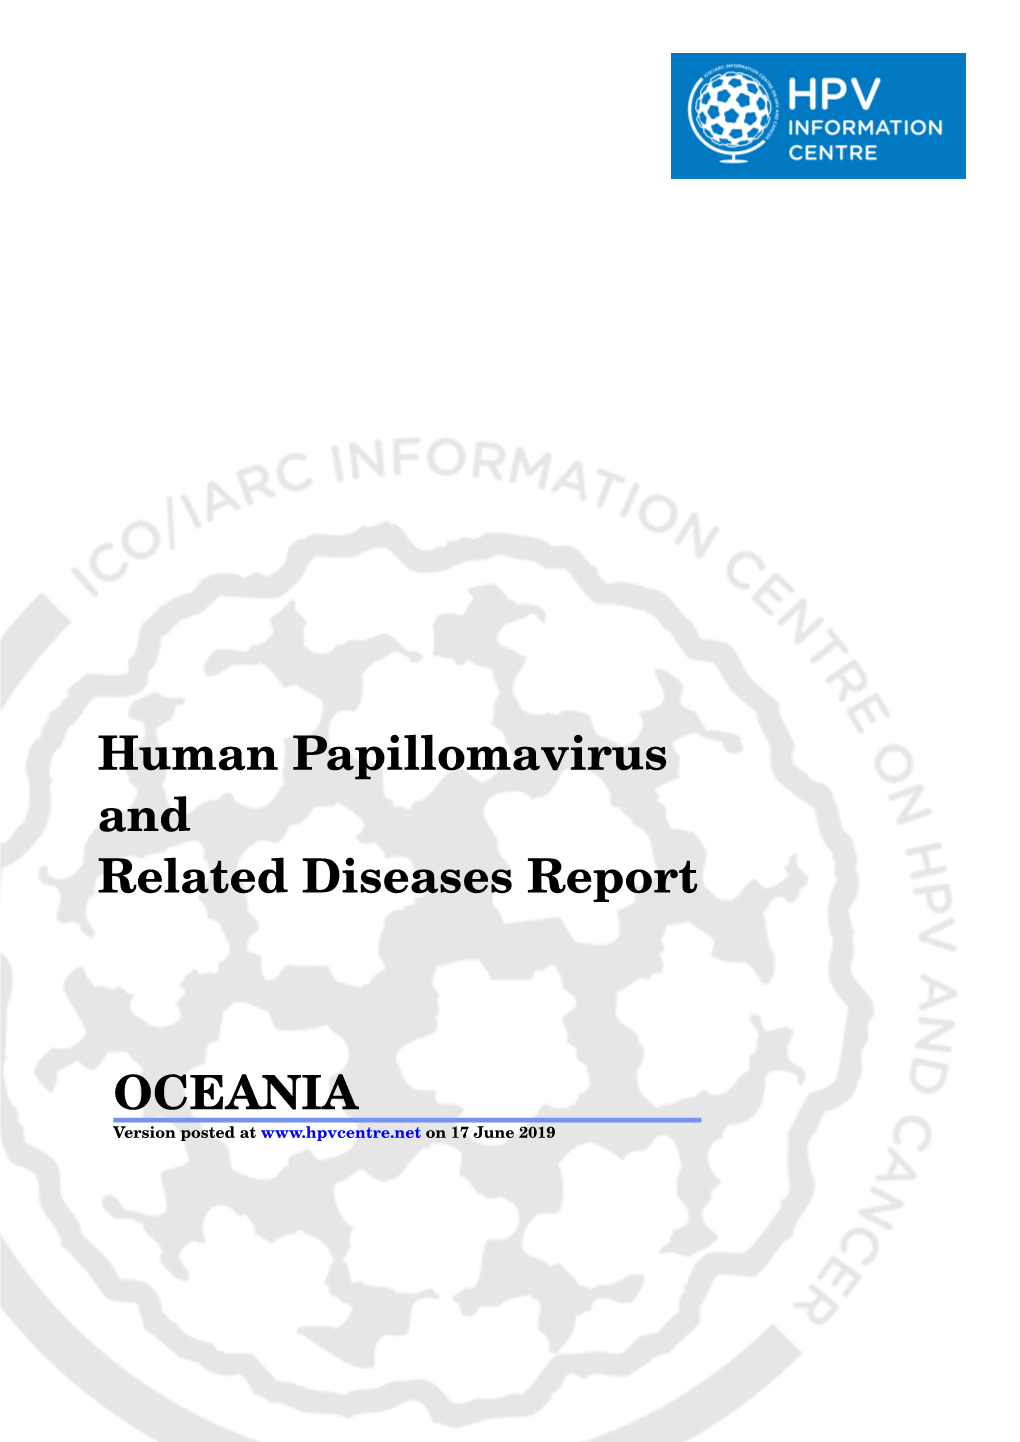 Oceania: Human Papillomavirus and Related Diseases, Summary Report 2019